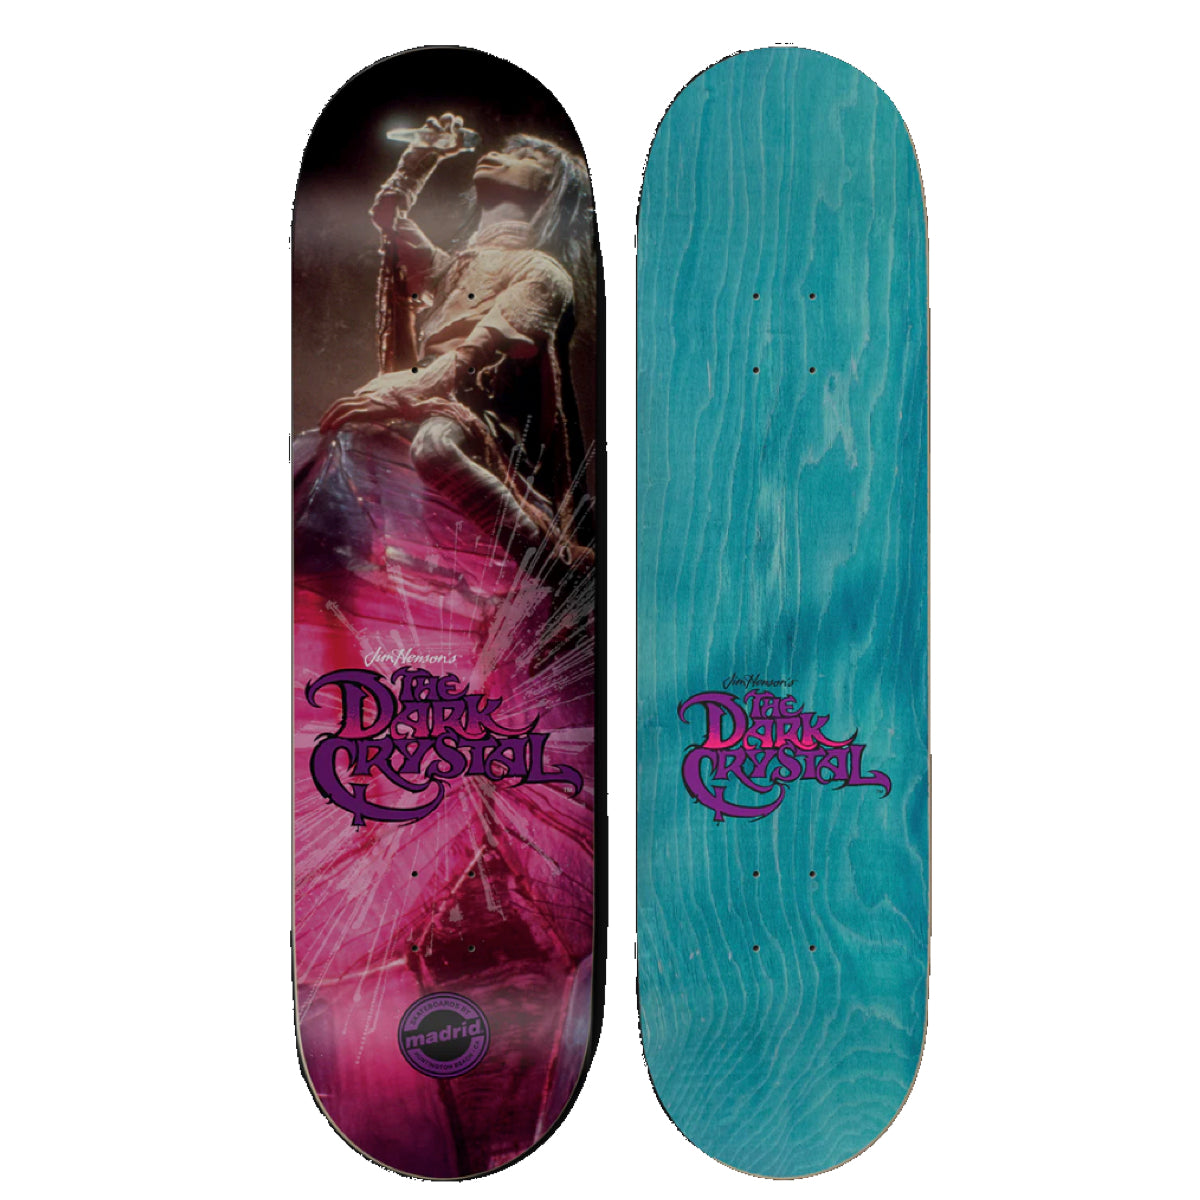 Madrid x Dark Chrystal Chrystal Skateboard Deck